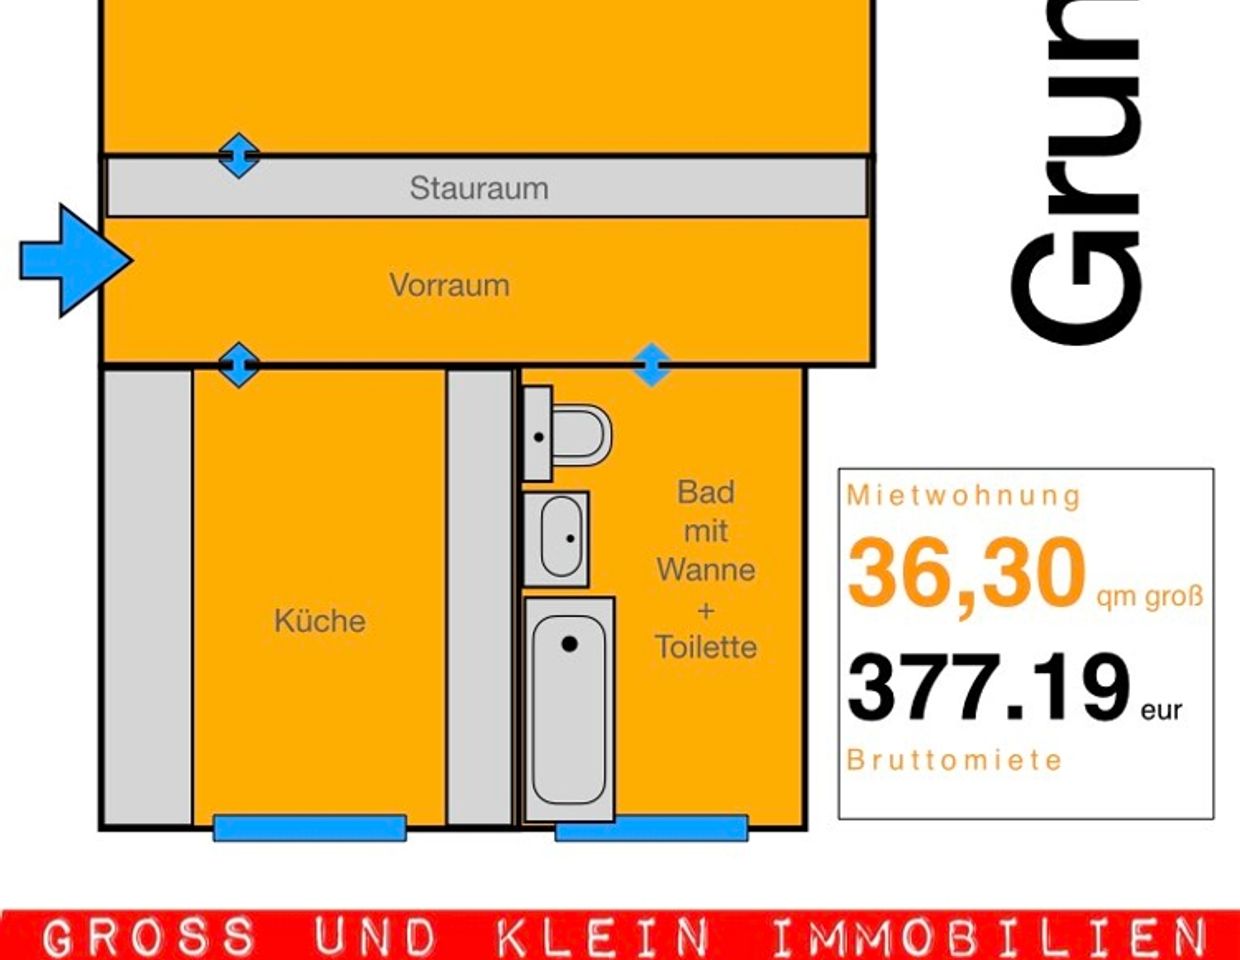 nicht alles perfekt - 377 EUR Bruttomiete total nette Gegend U4-Bahn-Nähe  provisionsfrei